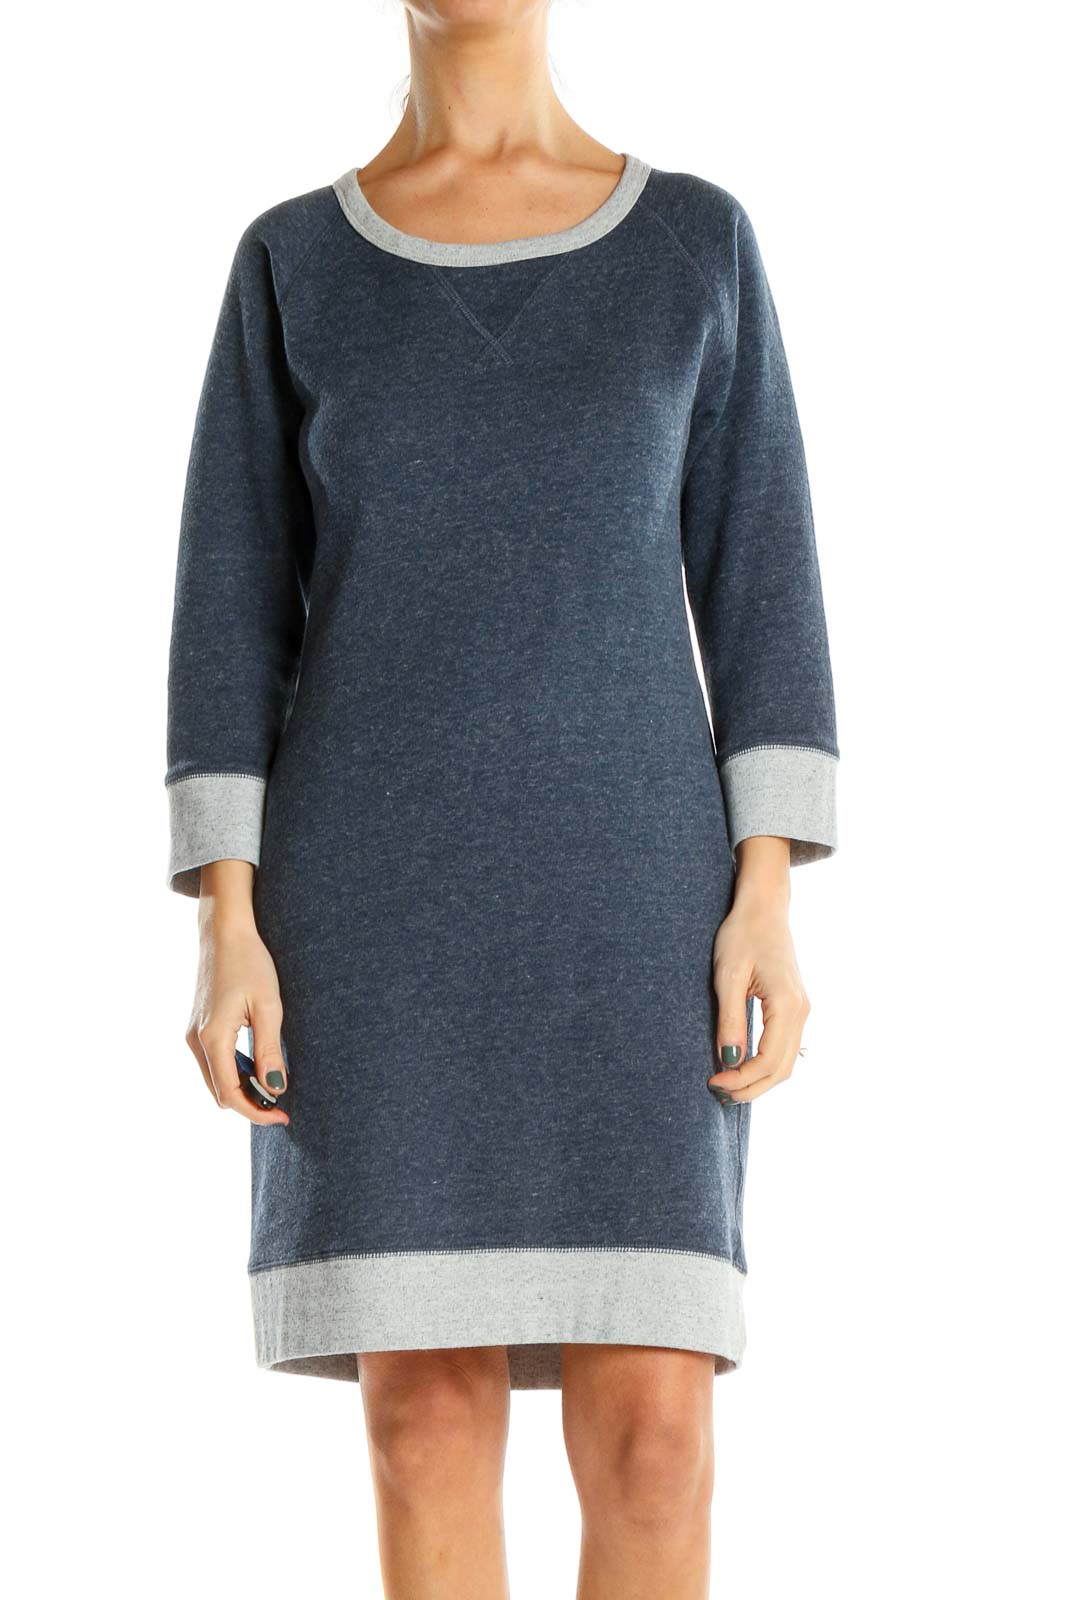 Blue Knit Sweater Dress Front